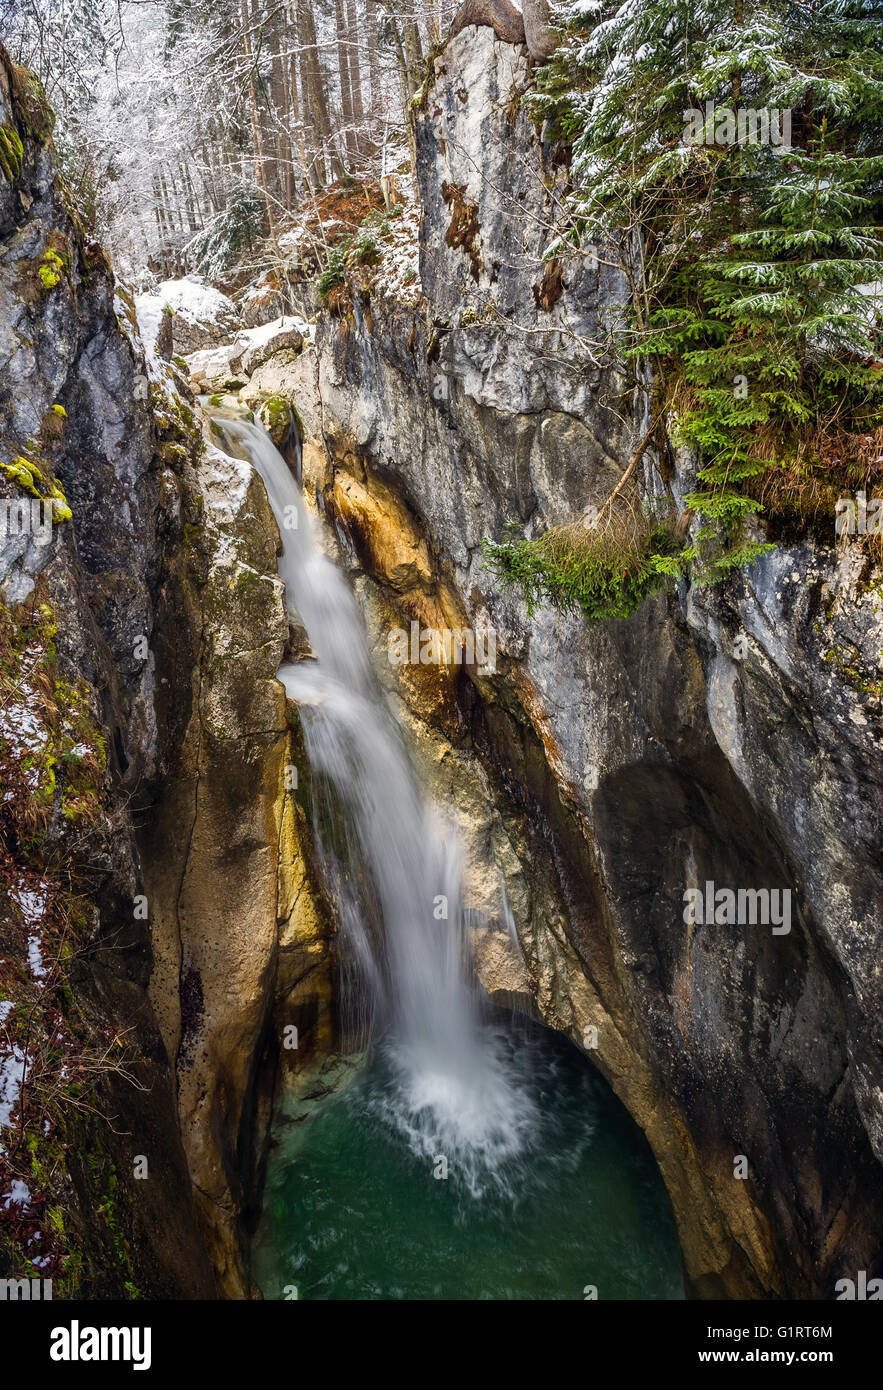 Tatzelwurm waterfall in winter, Upper Level, Mangfall mountains, Oberaudorf, Upper Bavaria, Bavaria, Germany Stock Photo